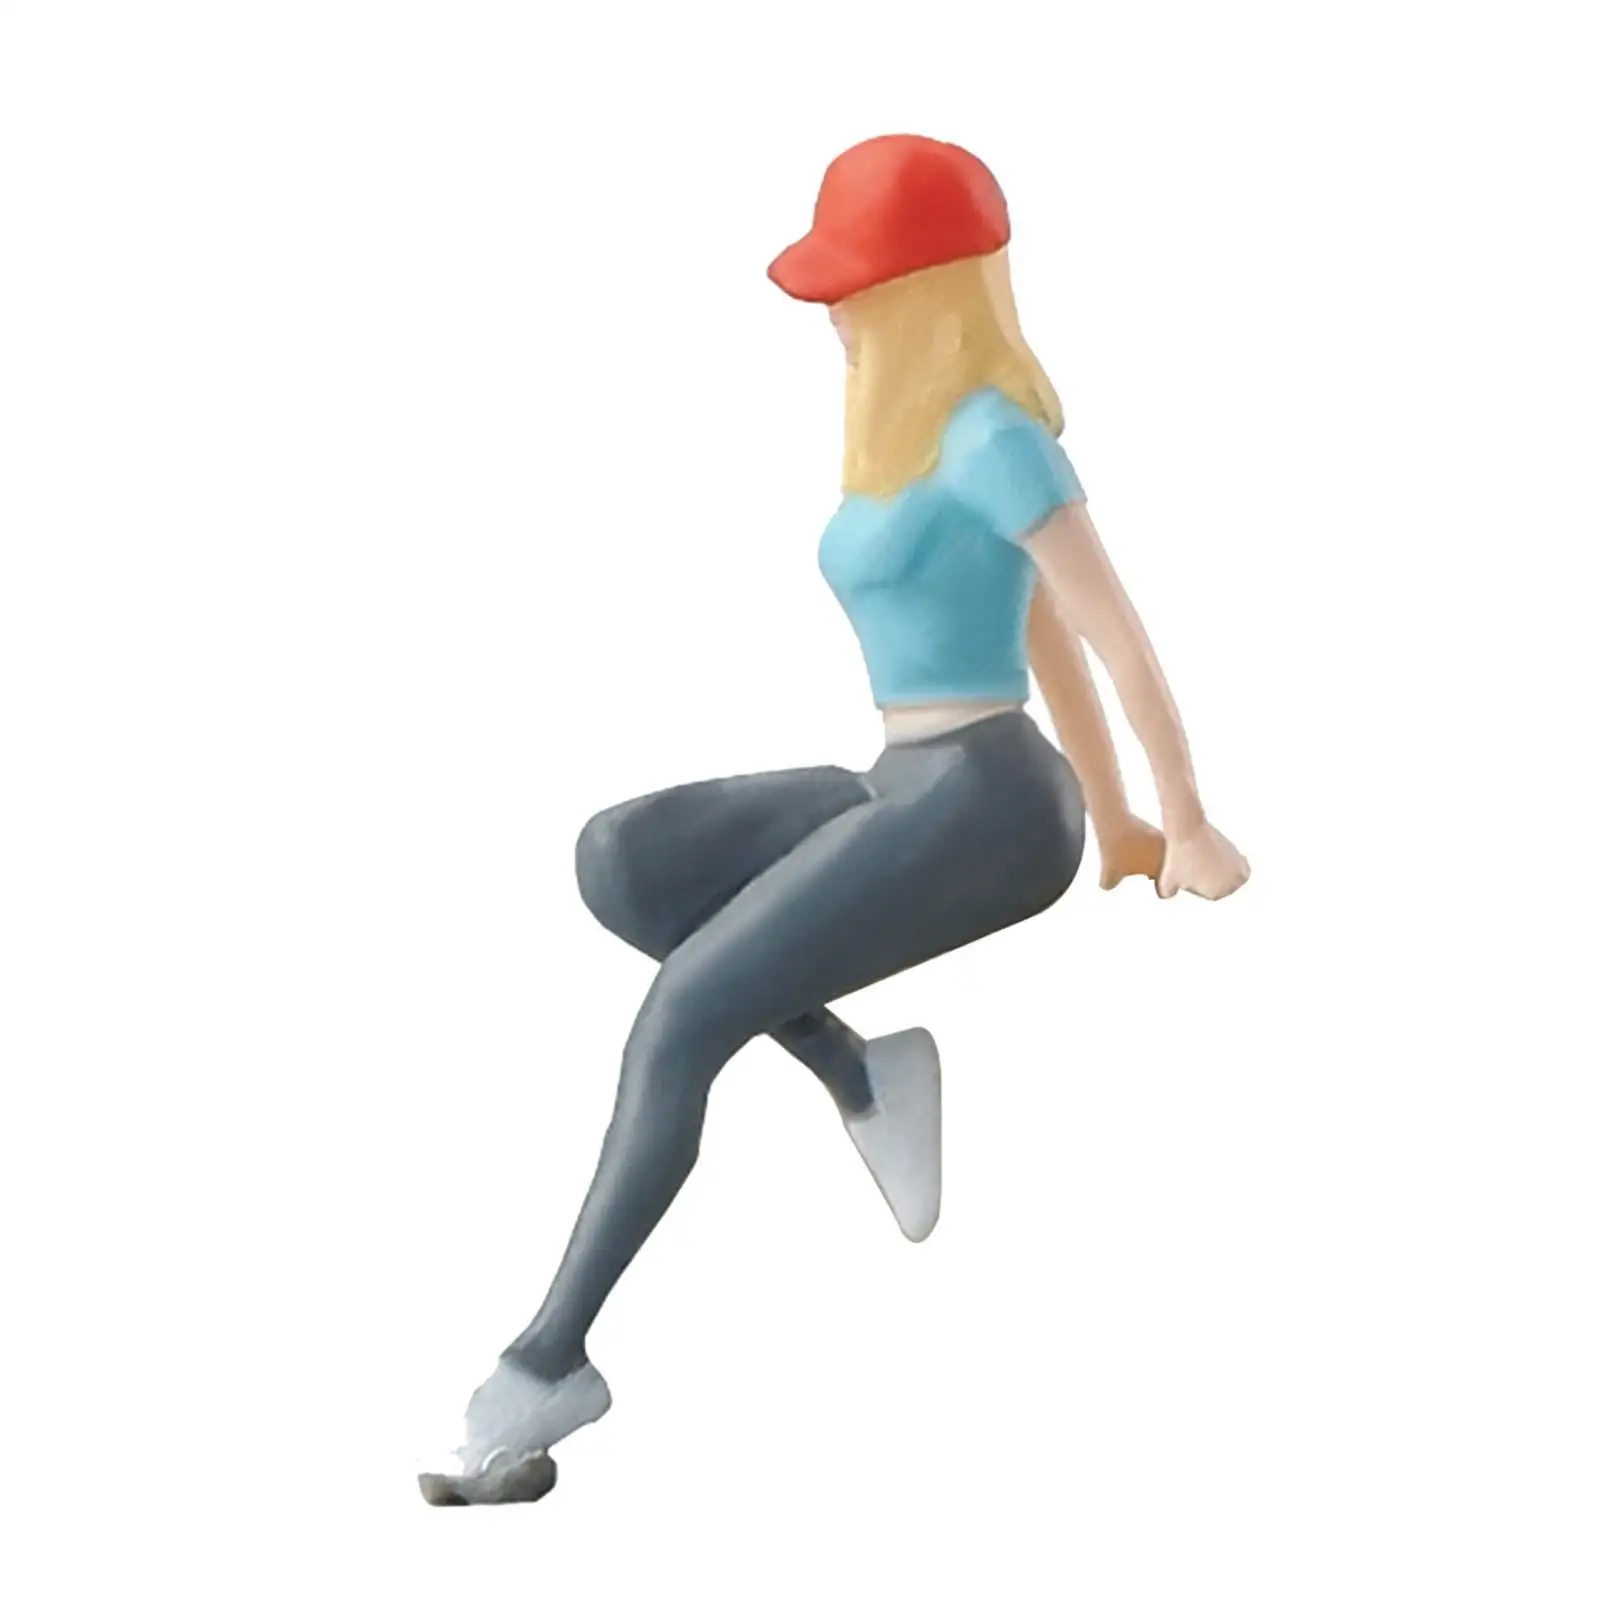 1:64 Girl Figure Standing Simulated Girl Figures for Diorama Miniature Scene